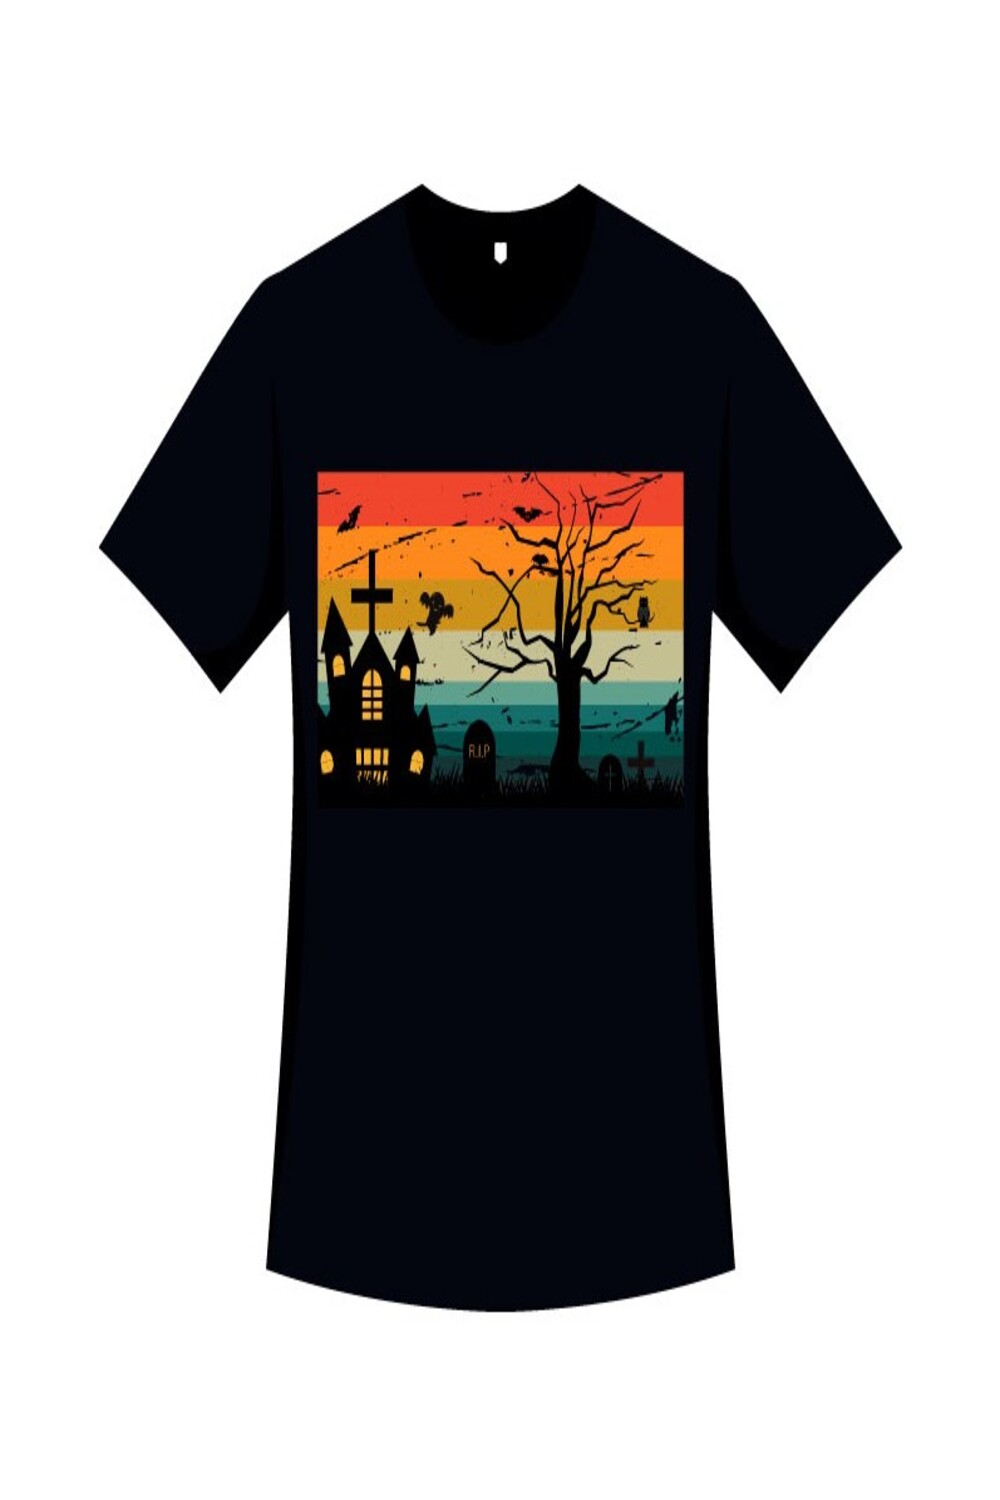 Halloween Color Retro T-shirt Design Pinterest image.